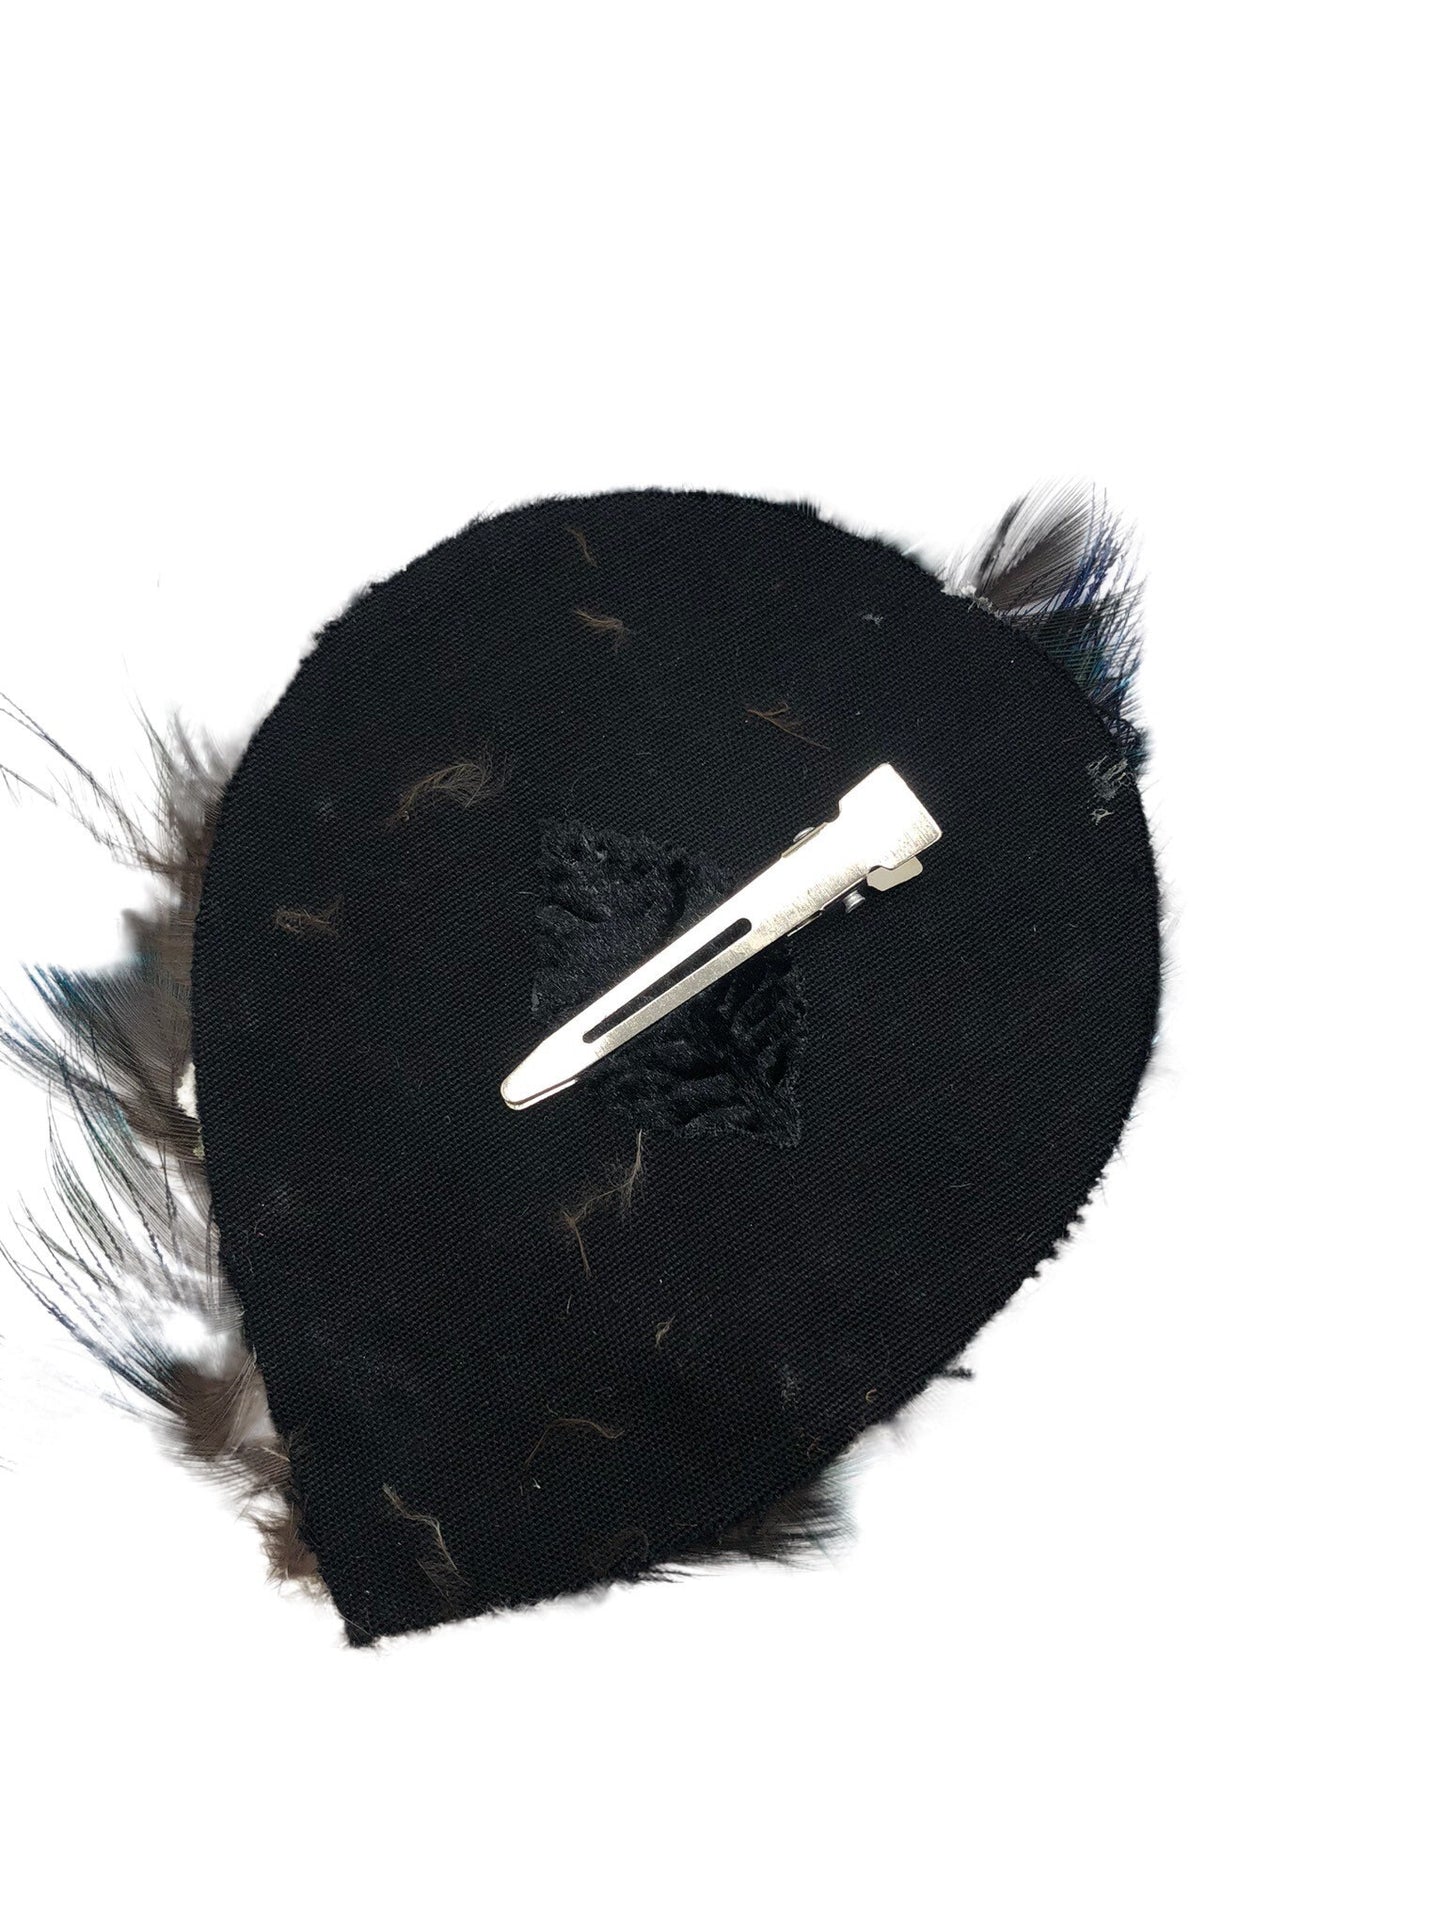 Karin's Garden Black White Feather Pad Clip Approx 4" x 3" Clip Into Hair or clip onto Lapel